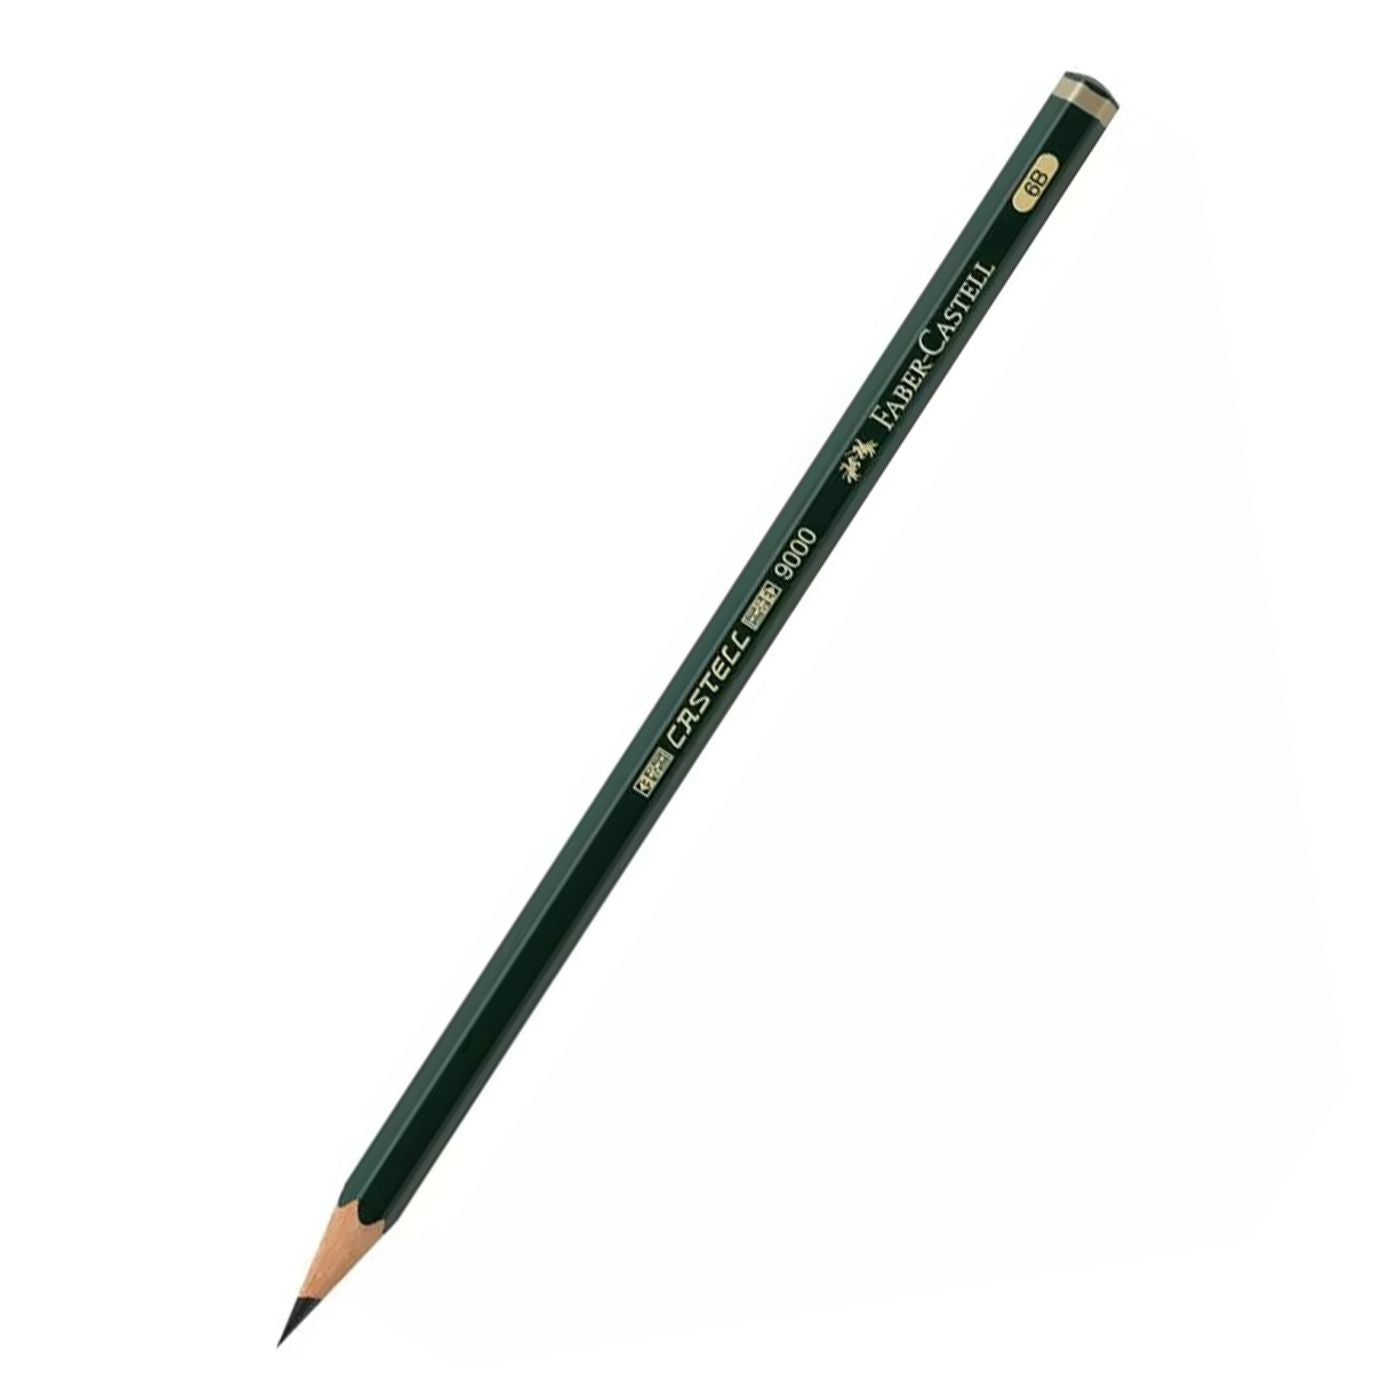 Faber-Castell Artist Grade Pencil Castell 9000 6B